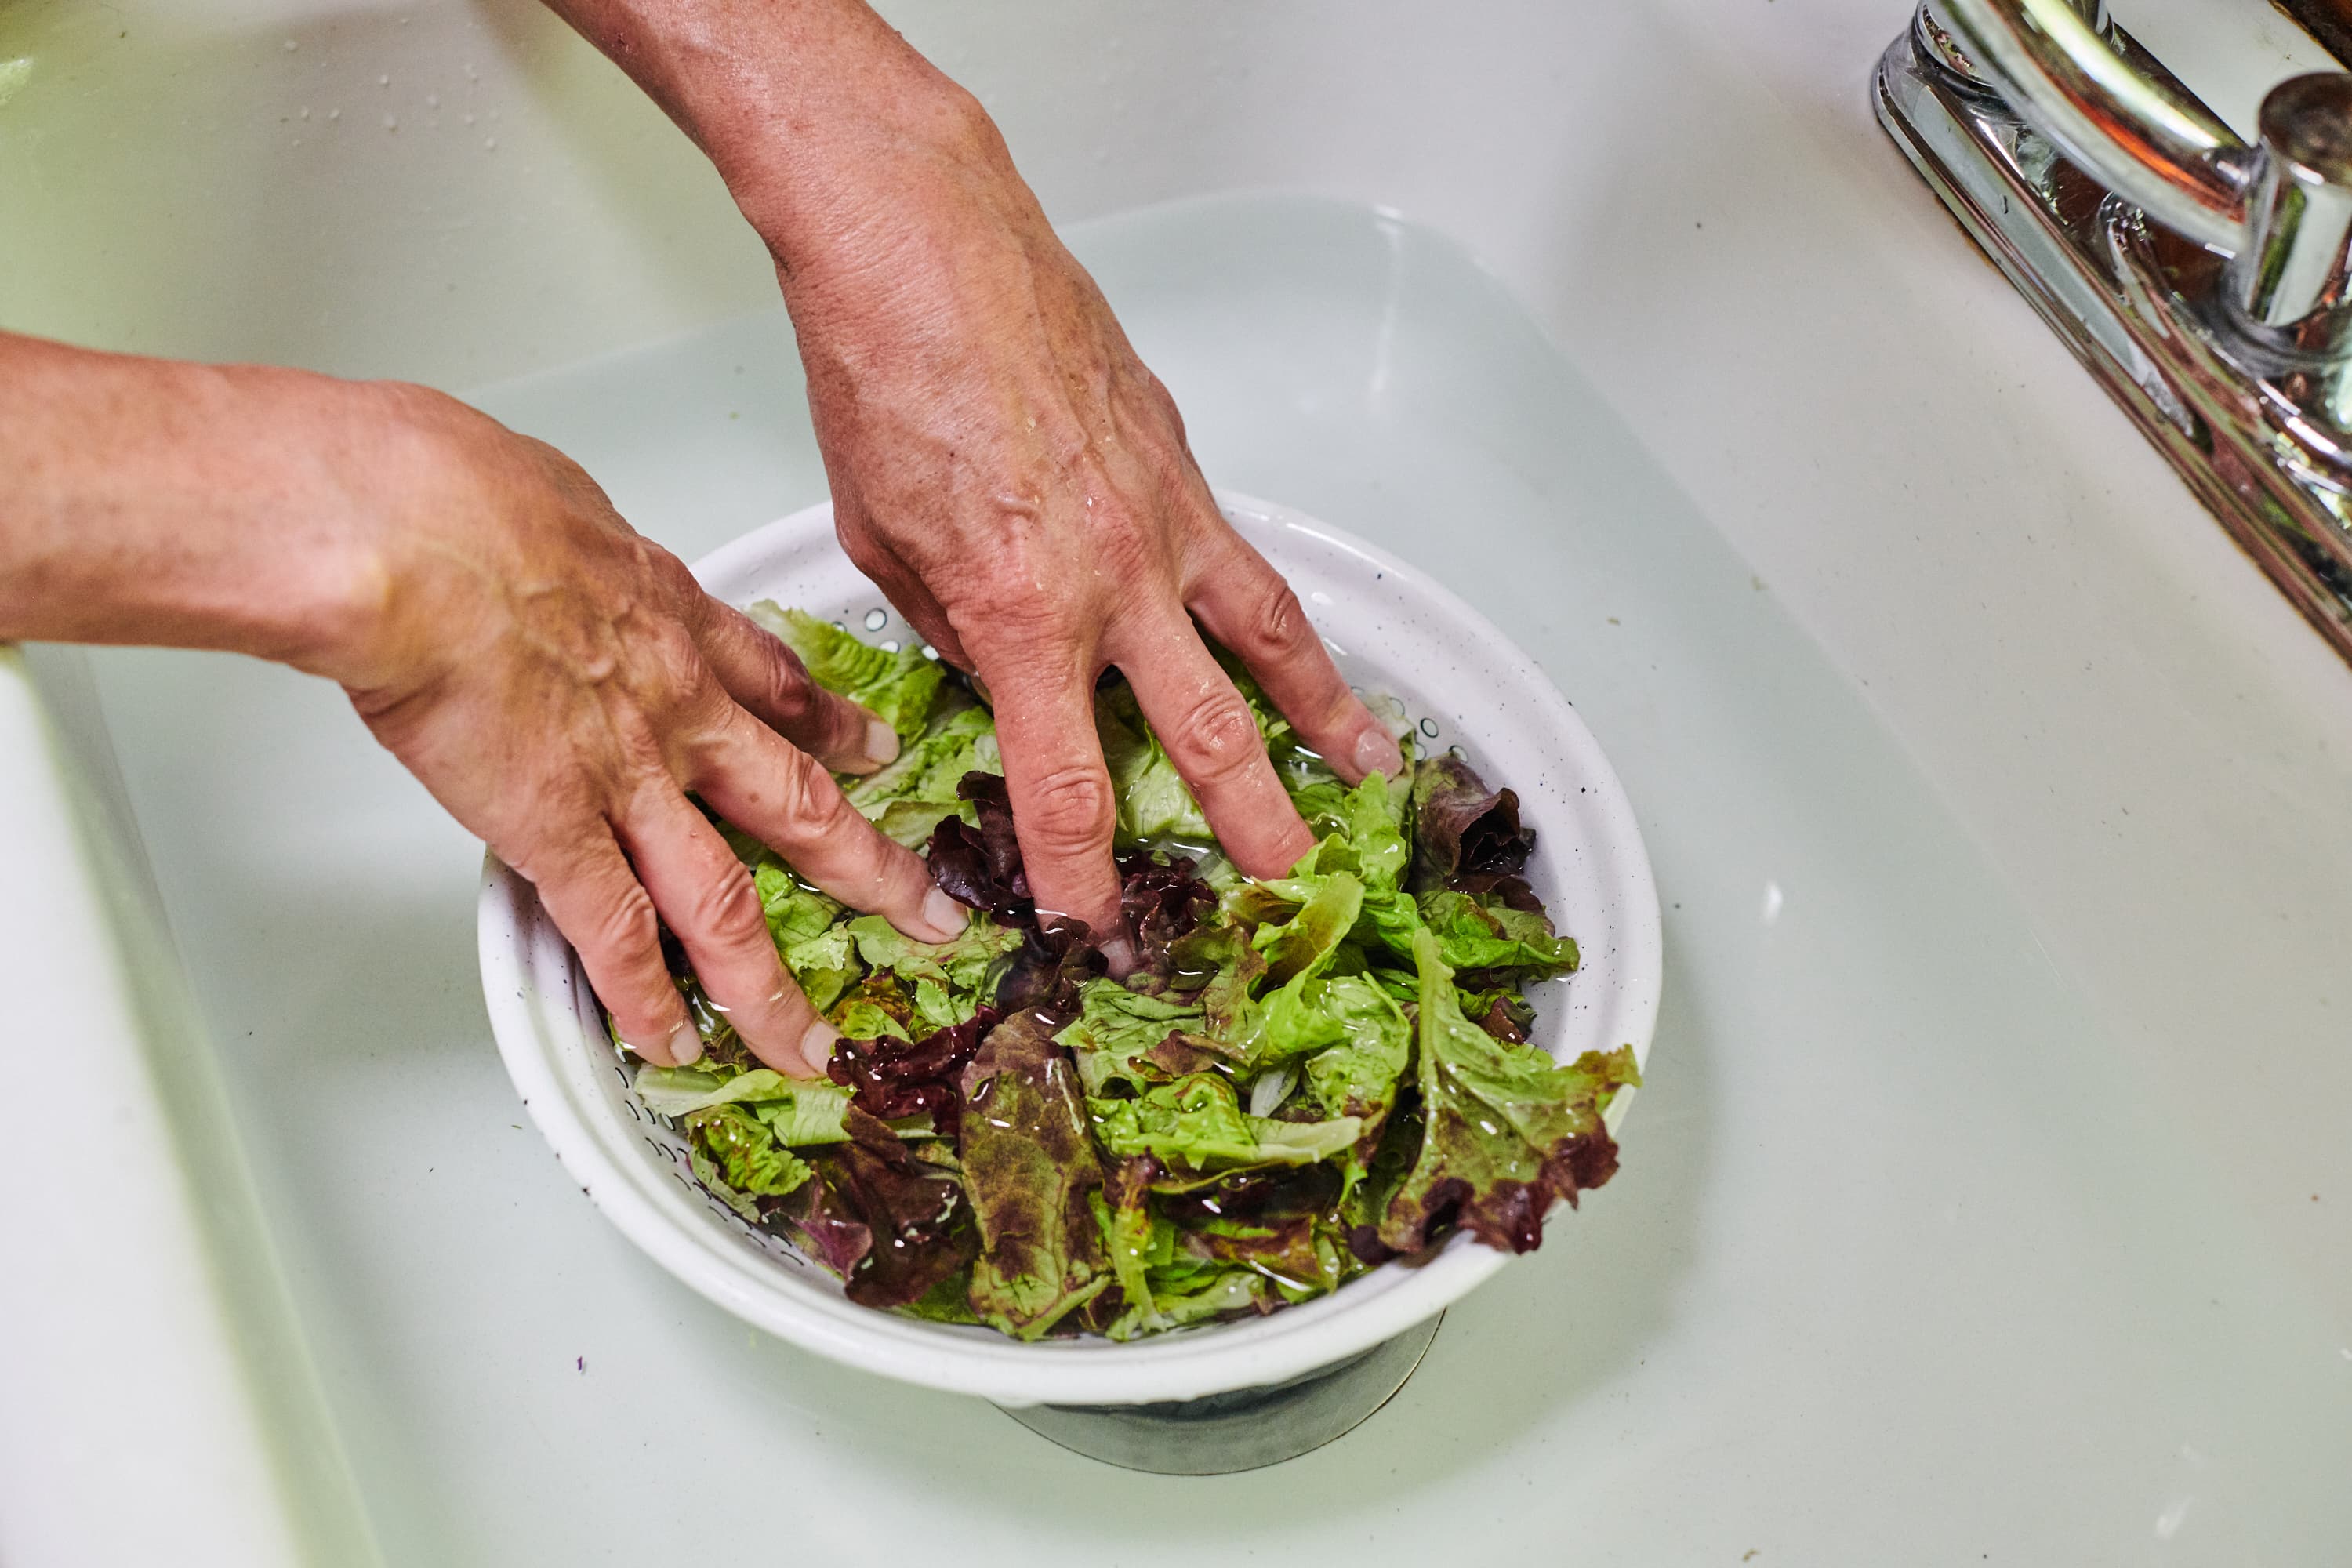 https://cdn.apartmenttherapy.info/image/upload/v1591374196/k/Photo/Series/2020-06-skills-showdown-wash-and-dry-salad-greens/Skills-Battle_Washing-and-Drying-Greens1587-clean-sink.jpg